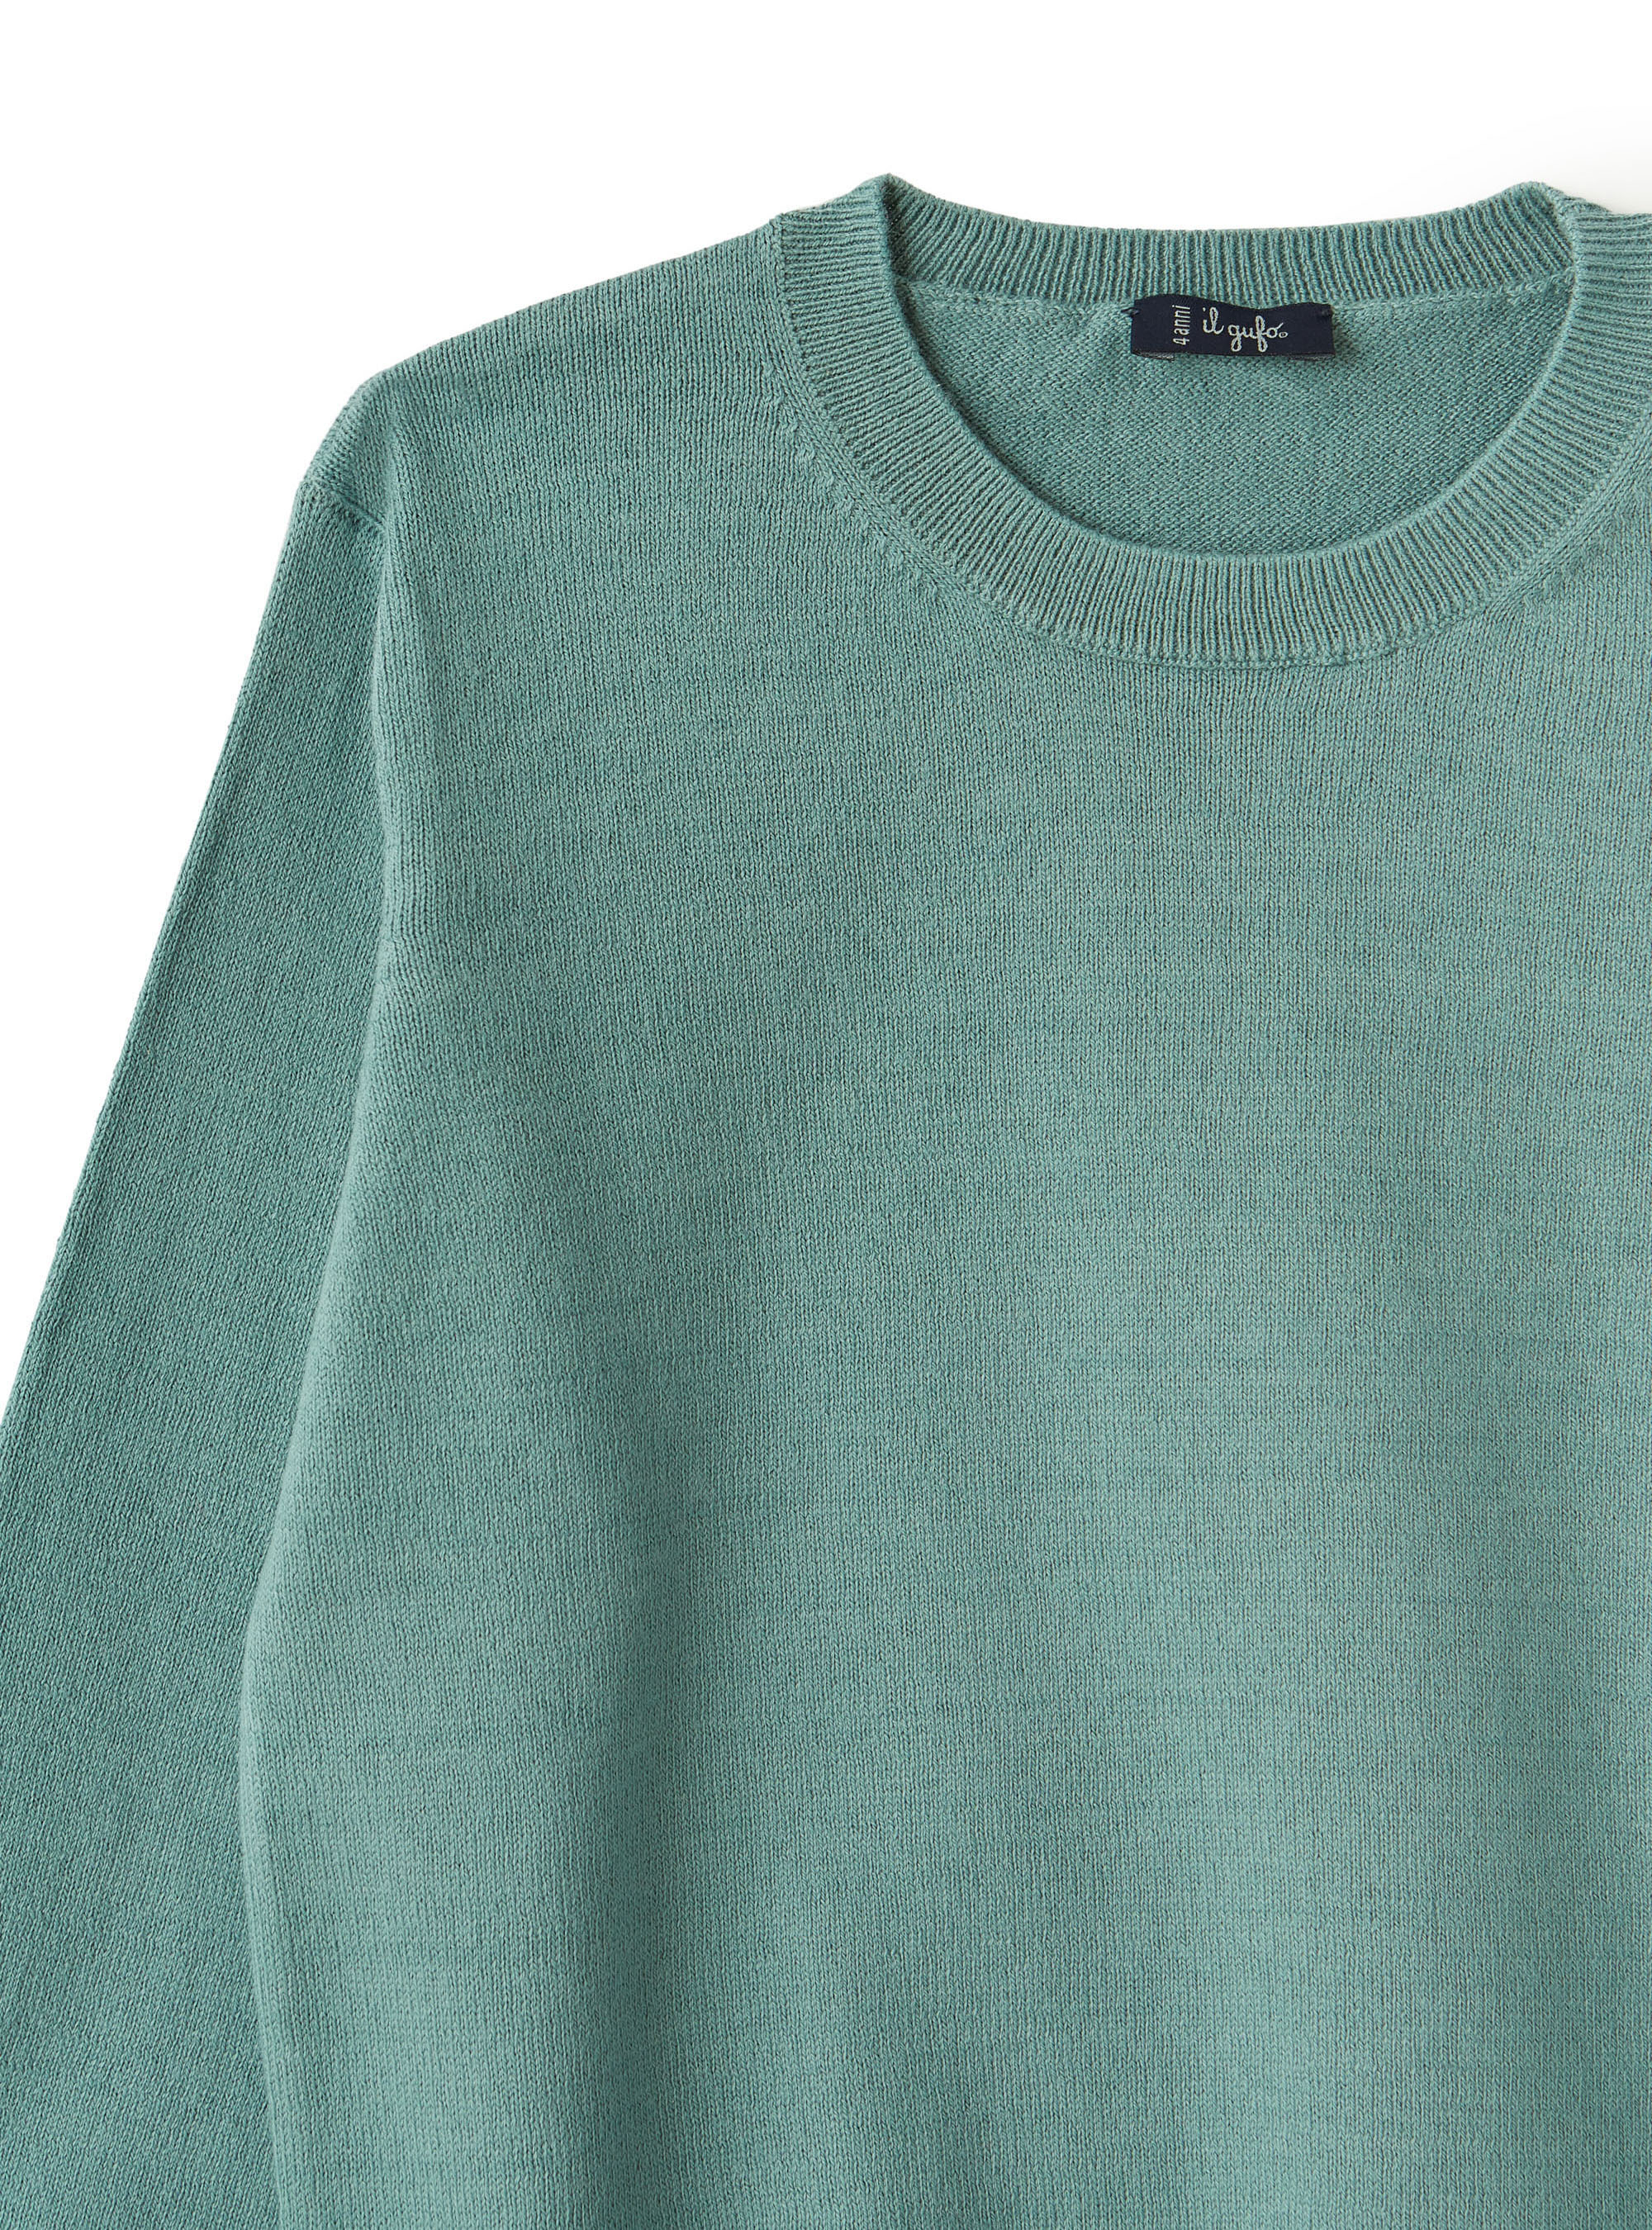 Organic cotton green sweater - Green | Il Gufo